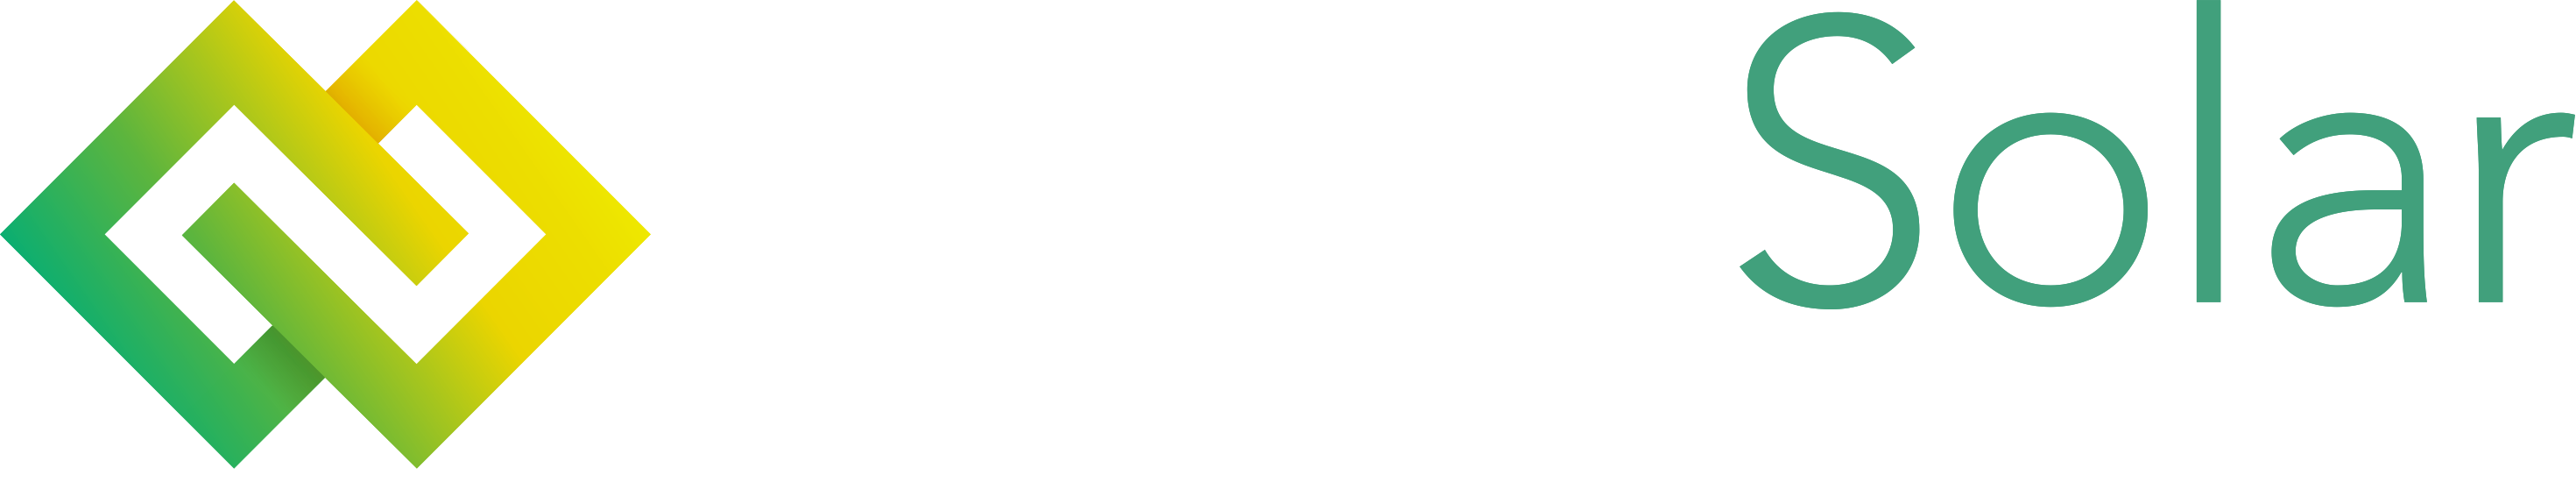 GGE Solar